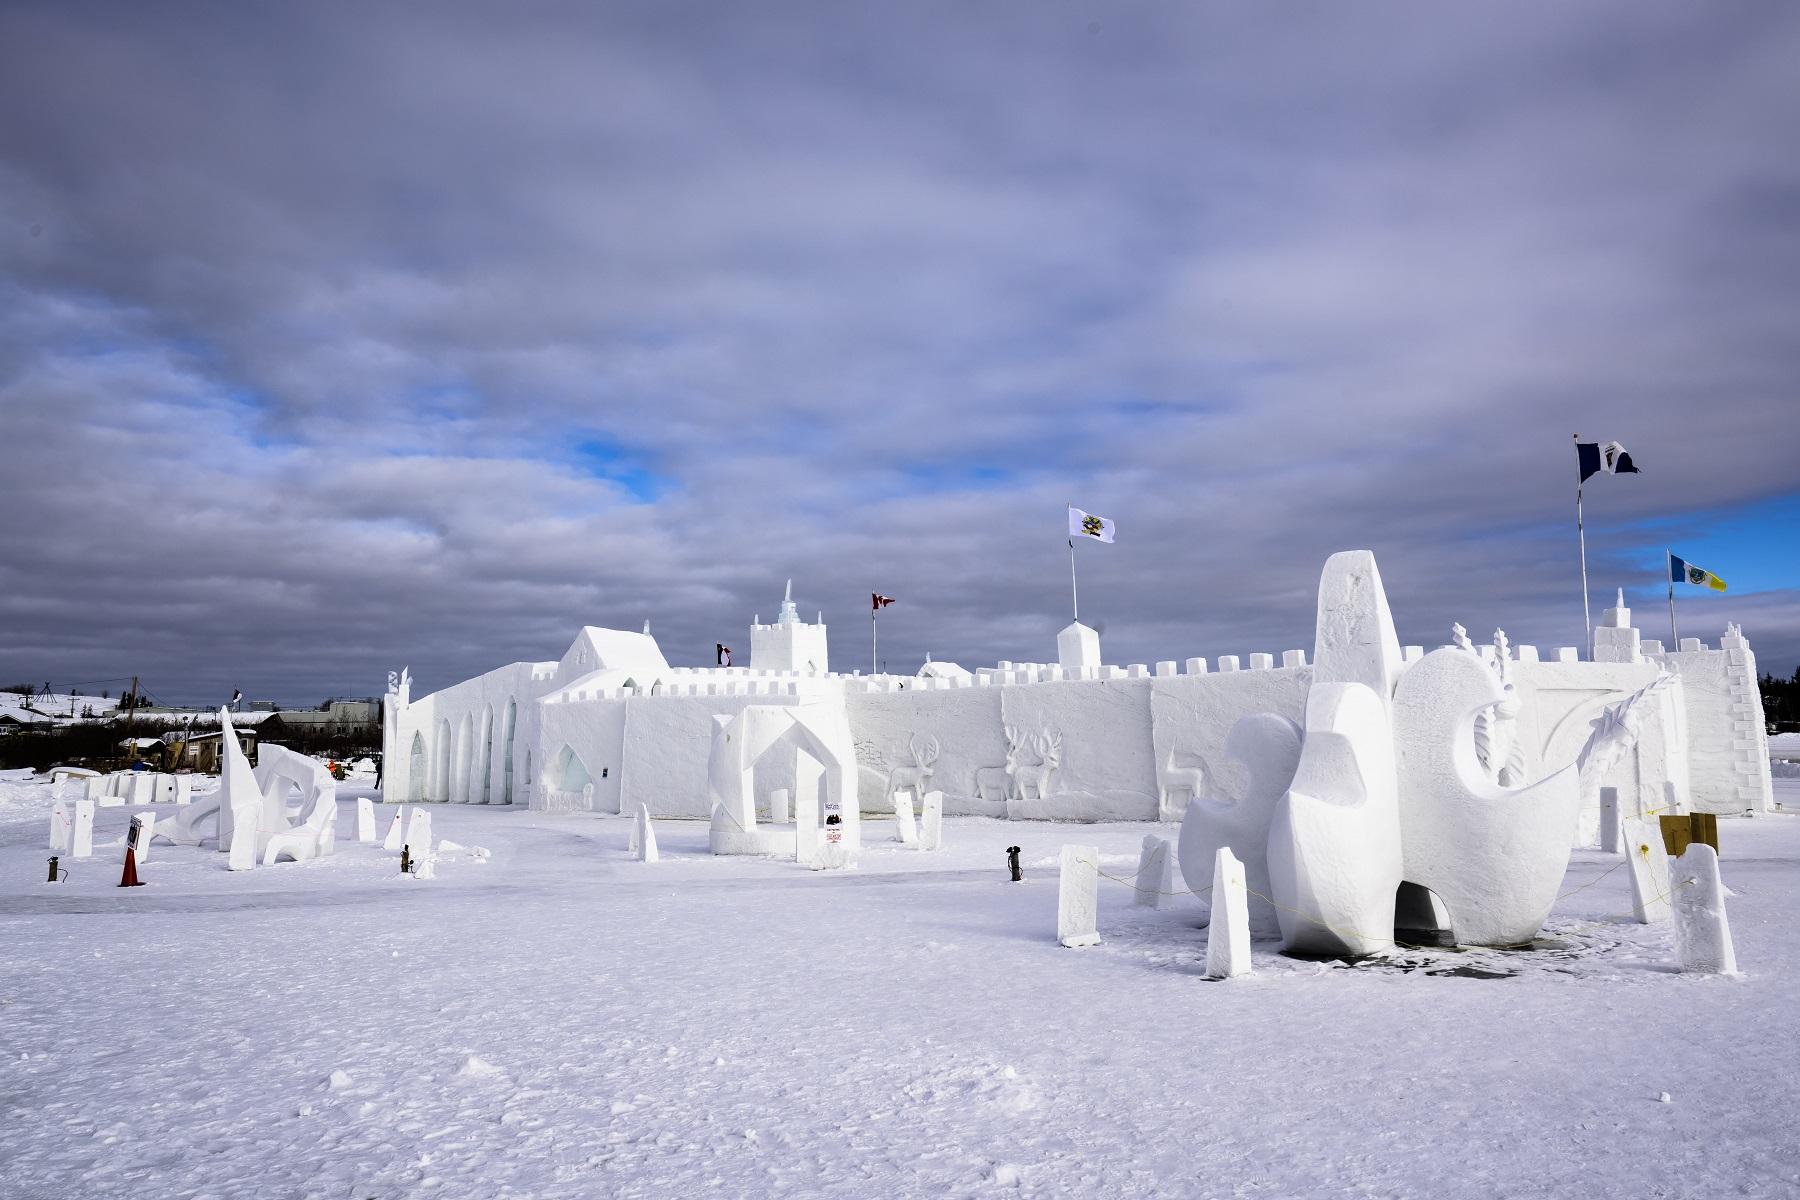 Snowking Winter Festival, Yellowknife, Northwest Territories